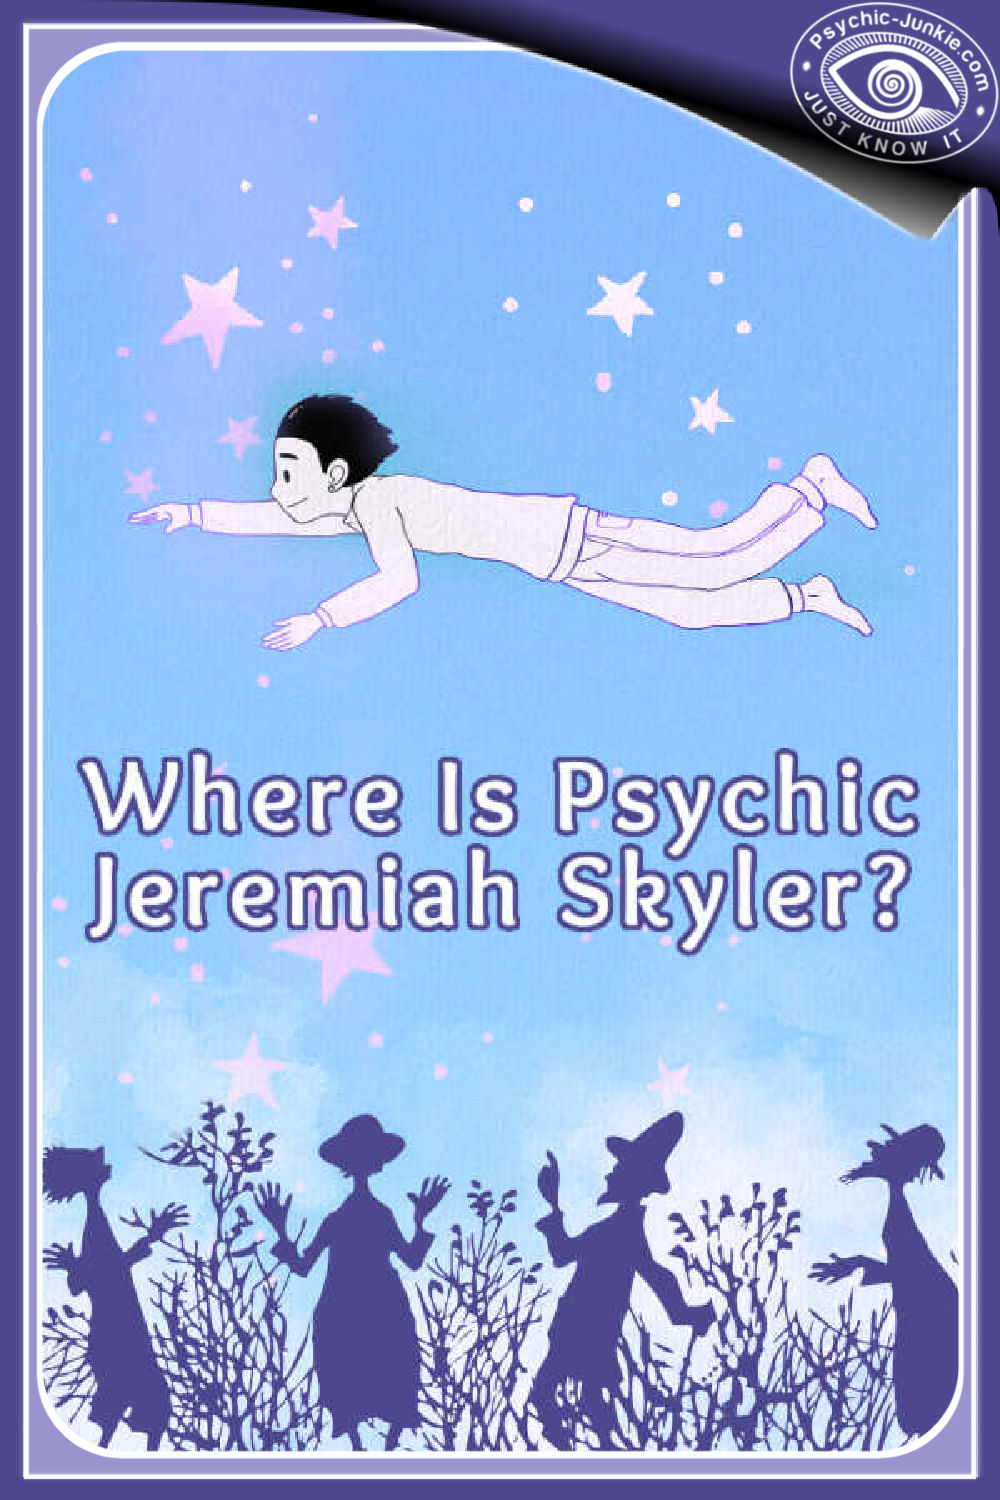 Reviews For Psychic Jeremiah Skyler